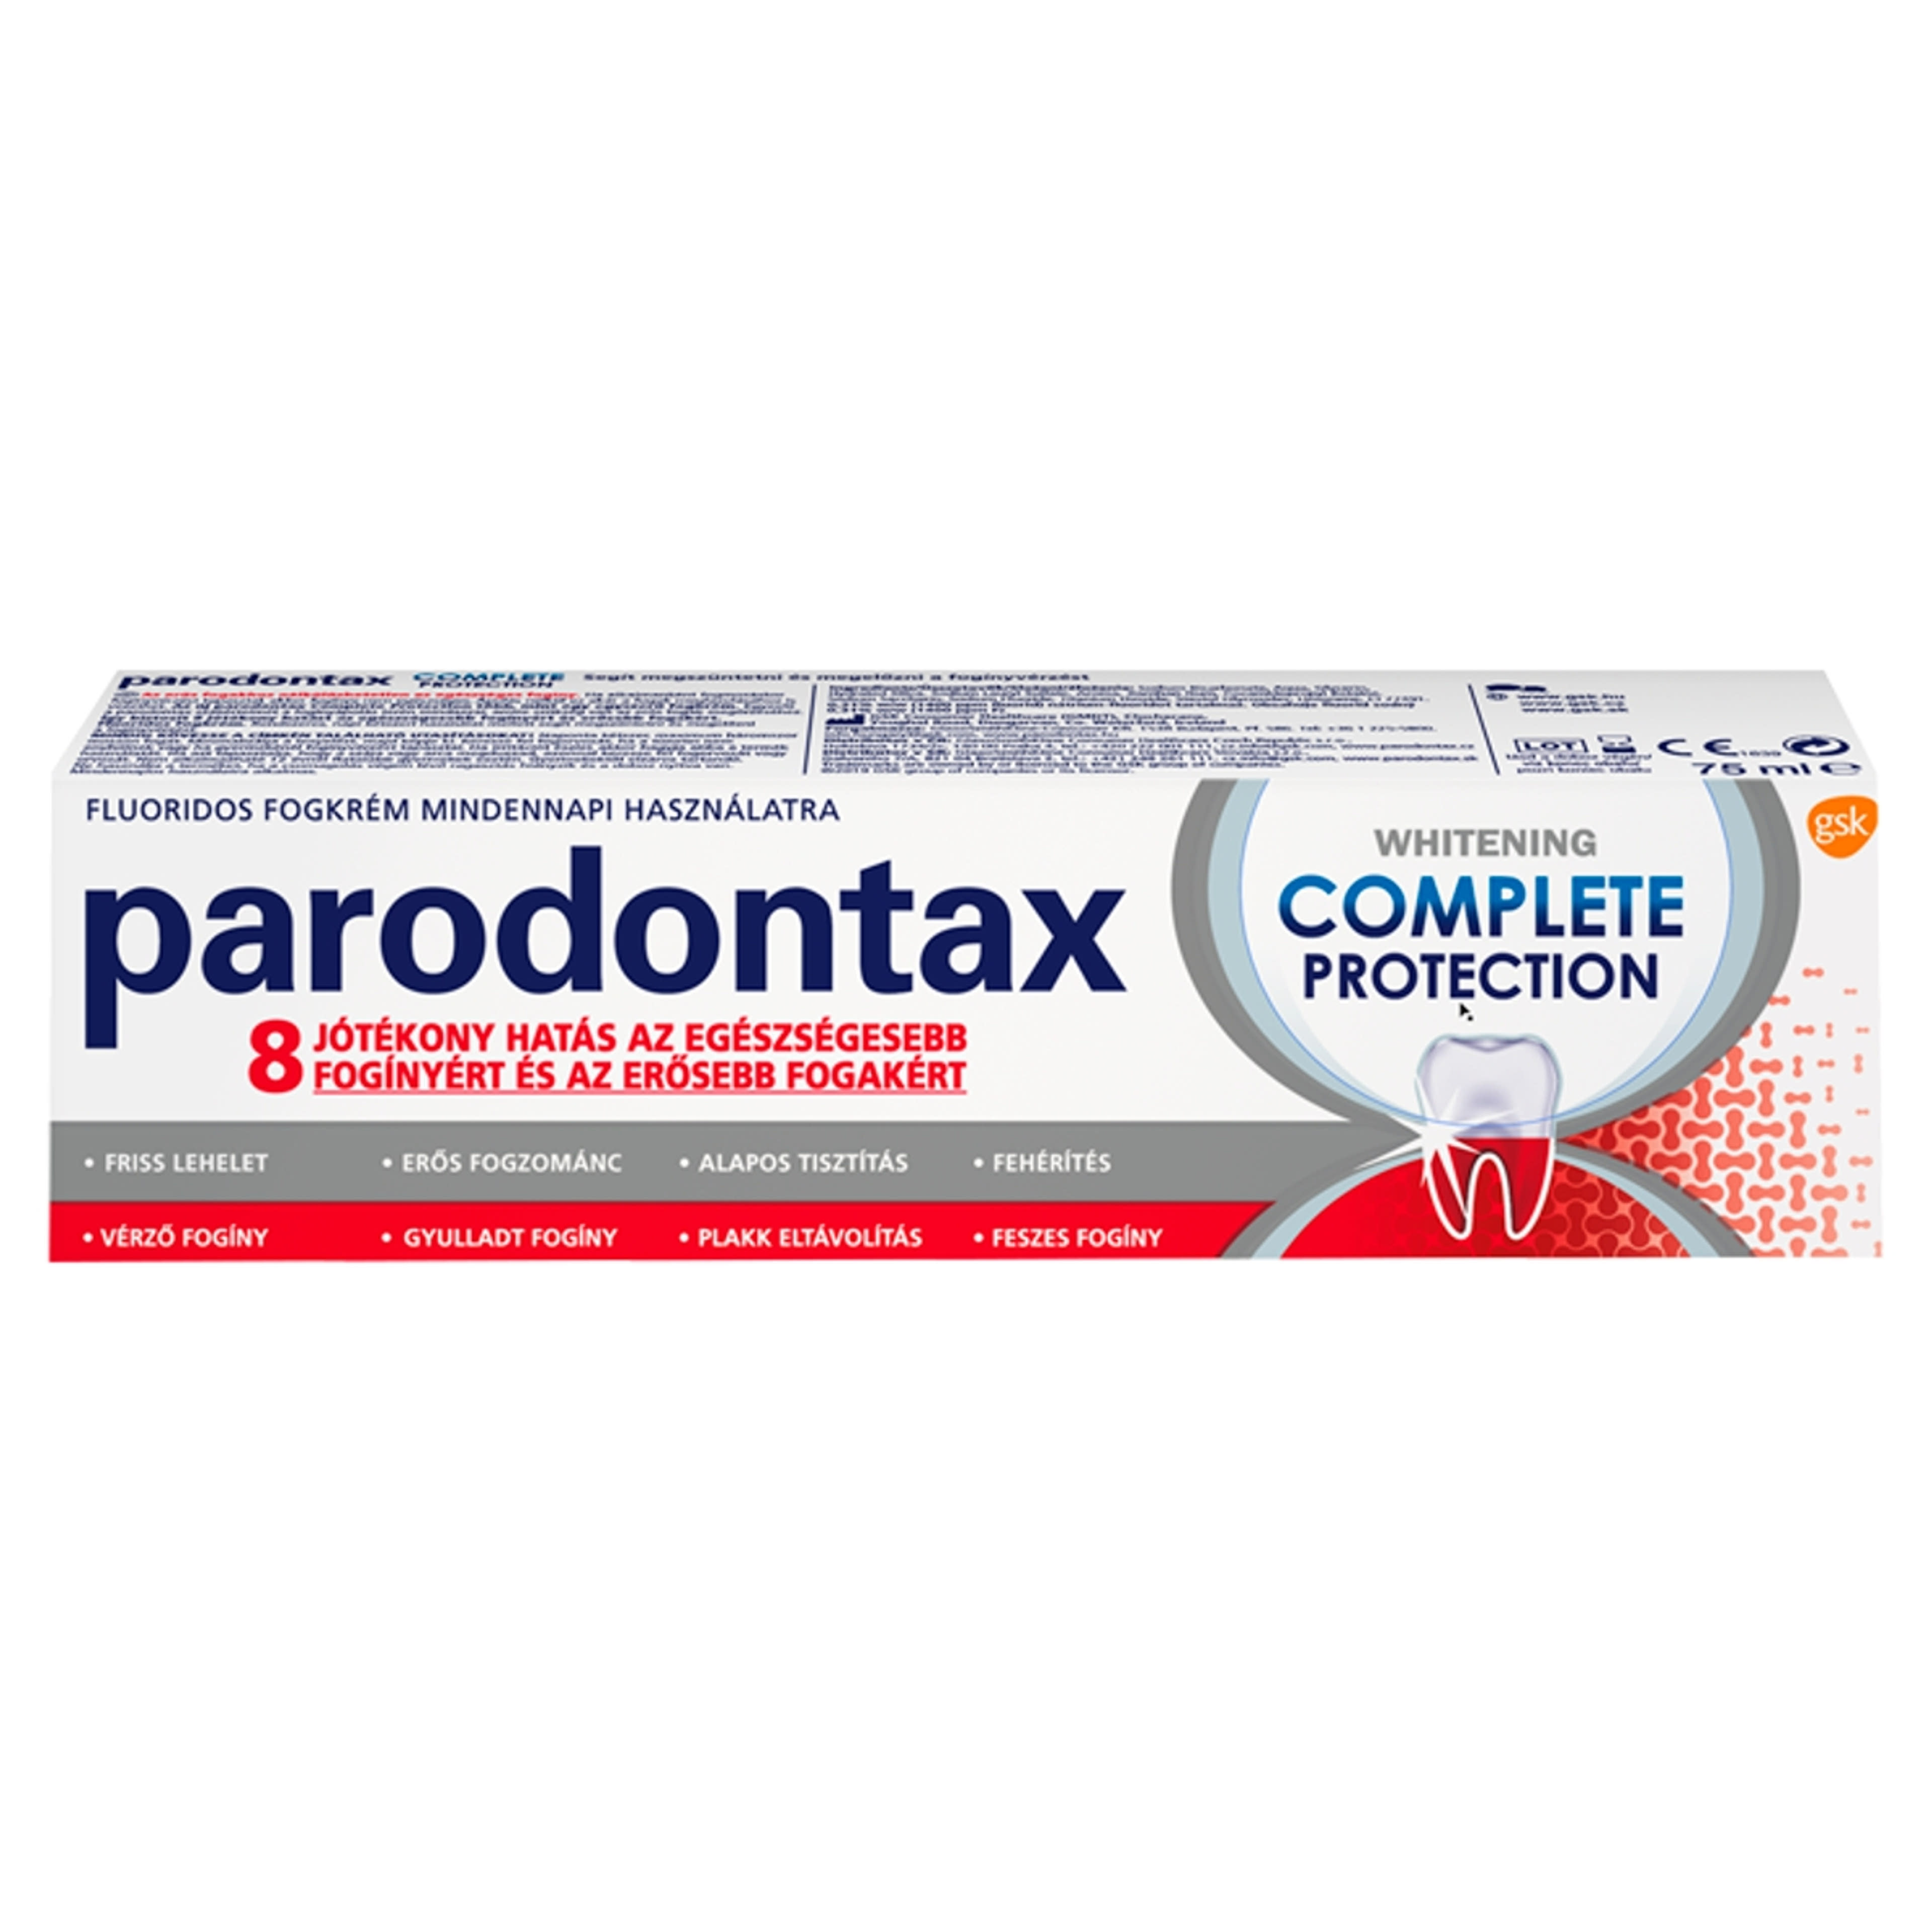 Parodontax Complete Protection Whitening fogkrém - 75 ml-3